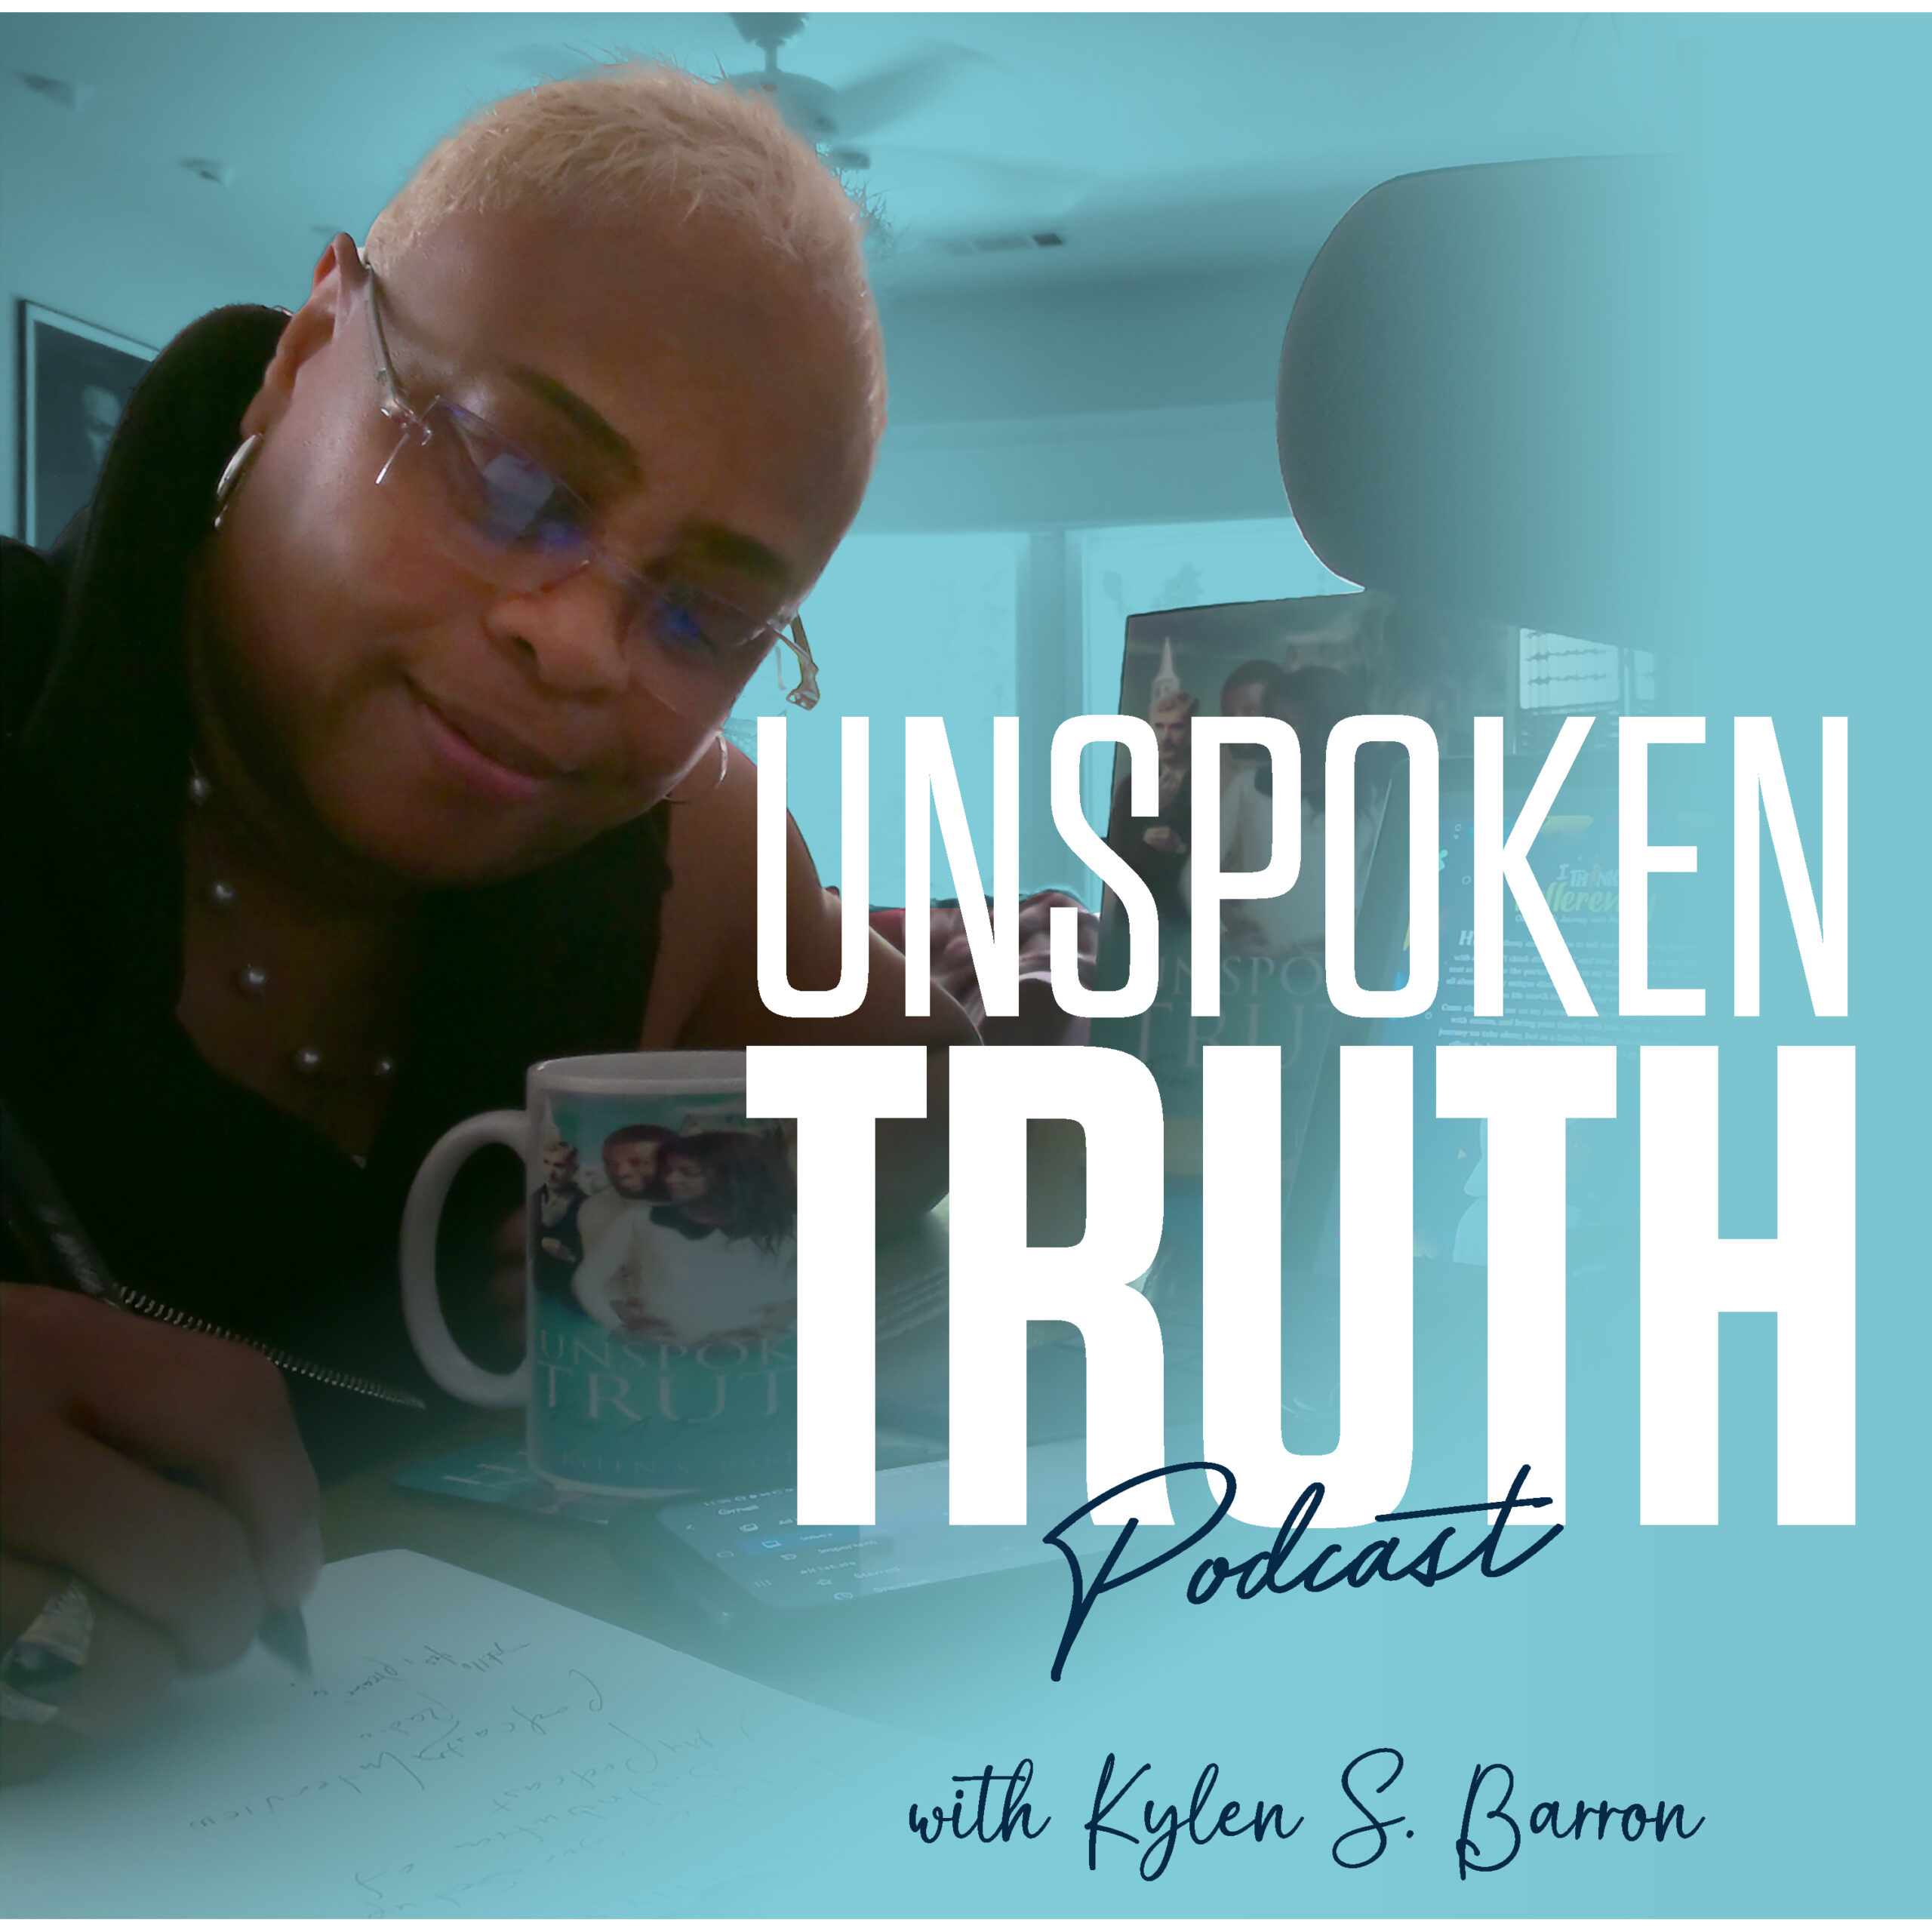 Kylen S Barron talks with Zach about “Unspoken Truth”